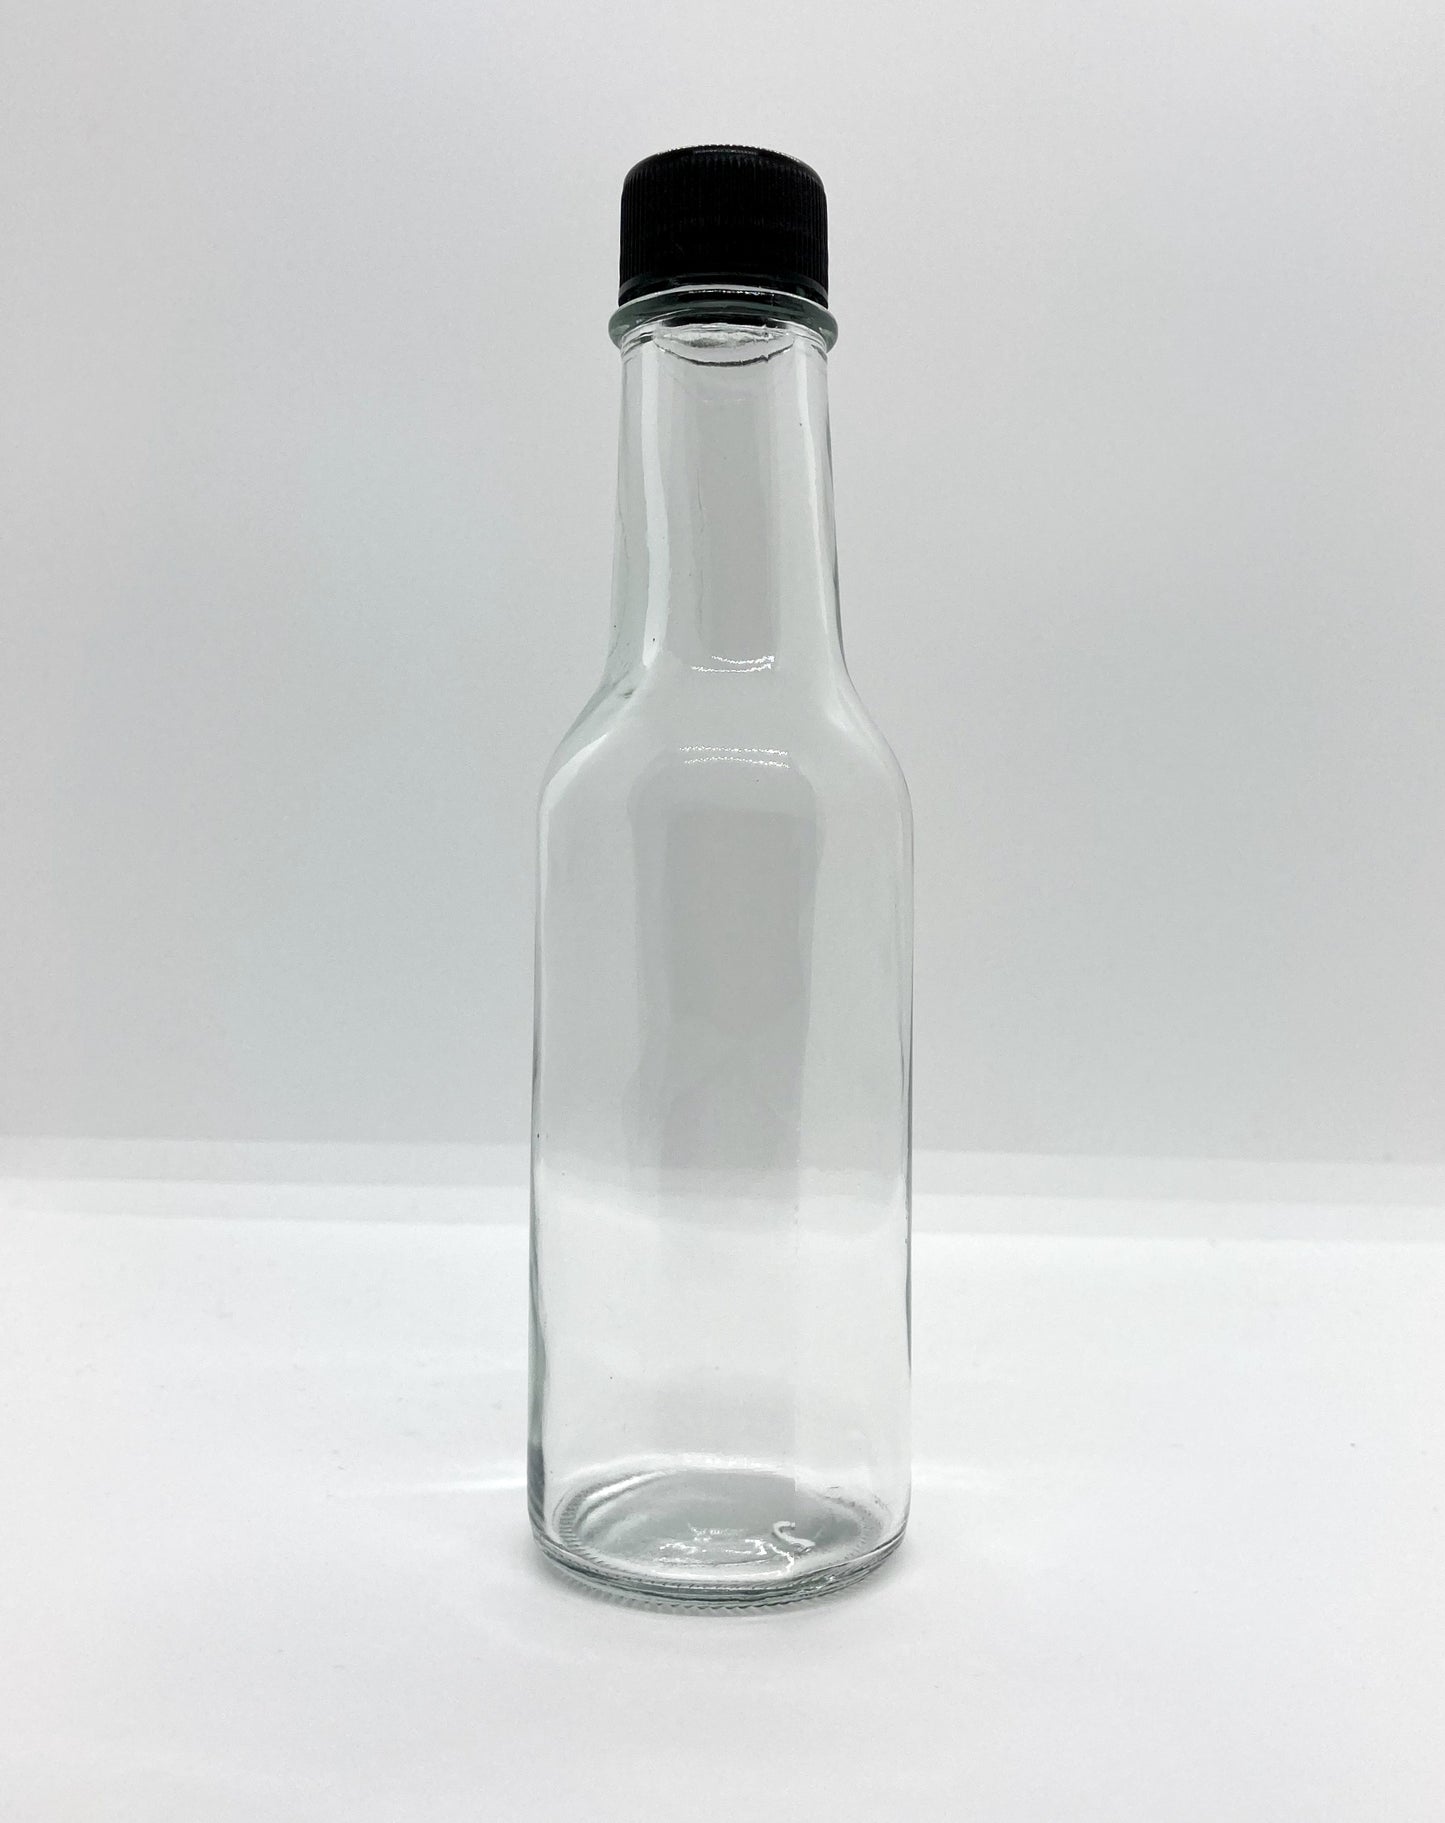 150mL. (Woozy Bottle) Clear Round Glass Bottle with Black Cap